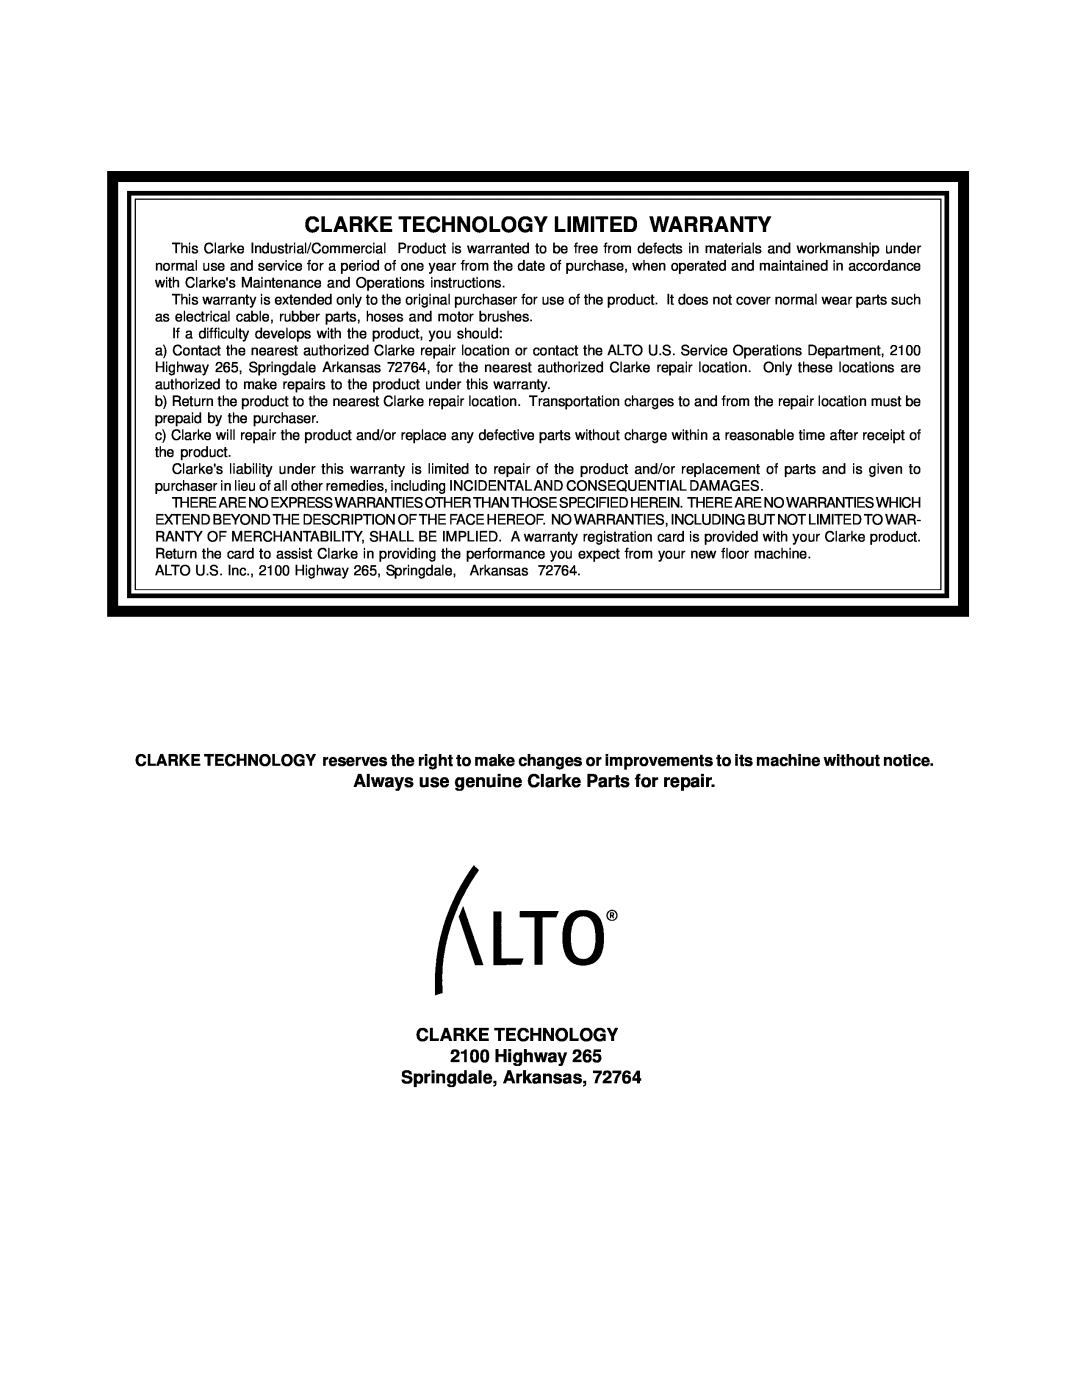 Nilfisk-ALTO Sweeper PS-27 manual Clarke Technology Limited Warranty, Highway Springdale, Arkansas 